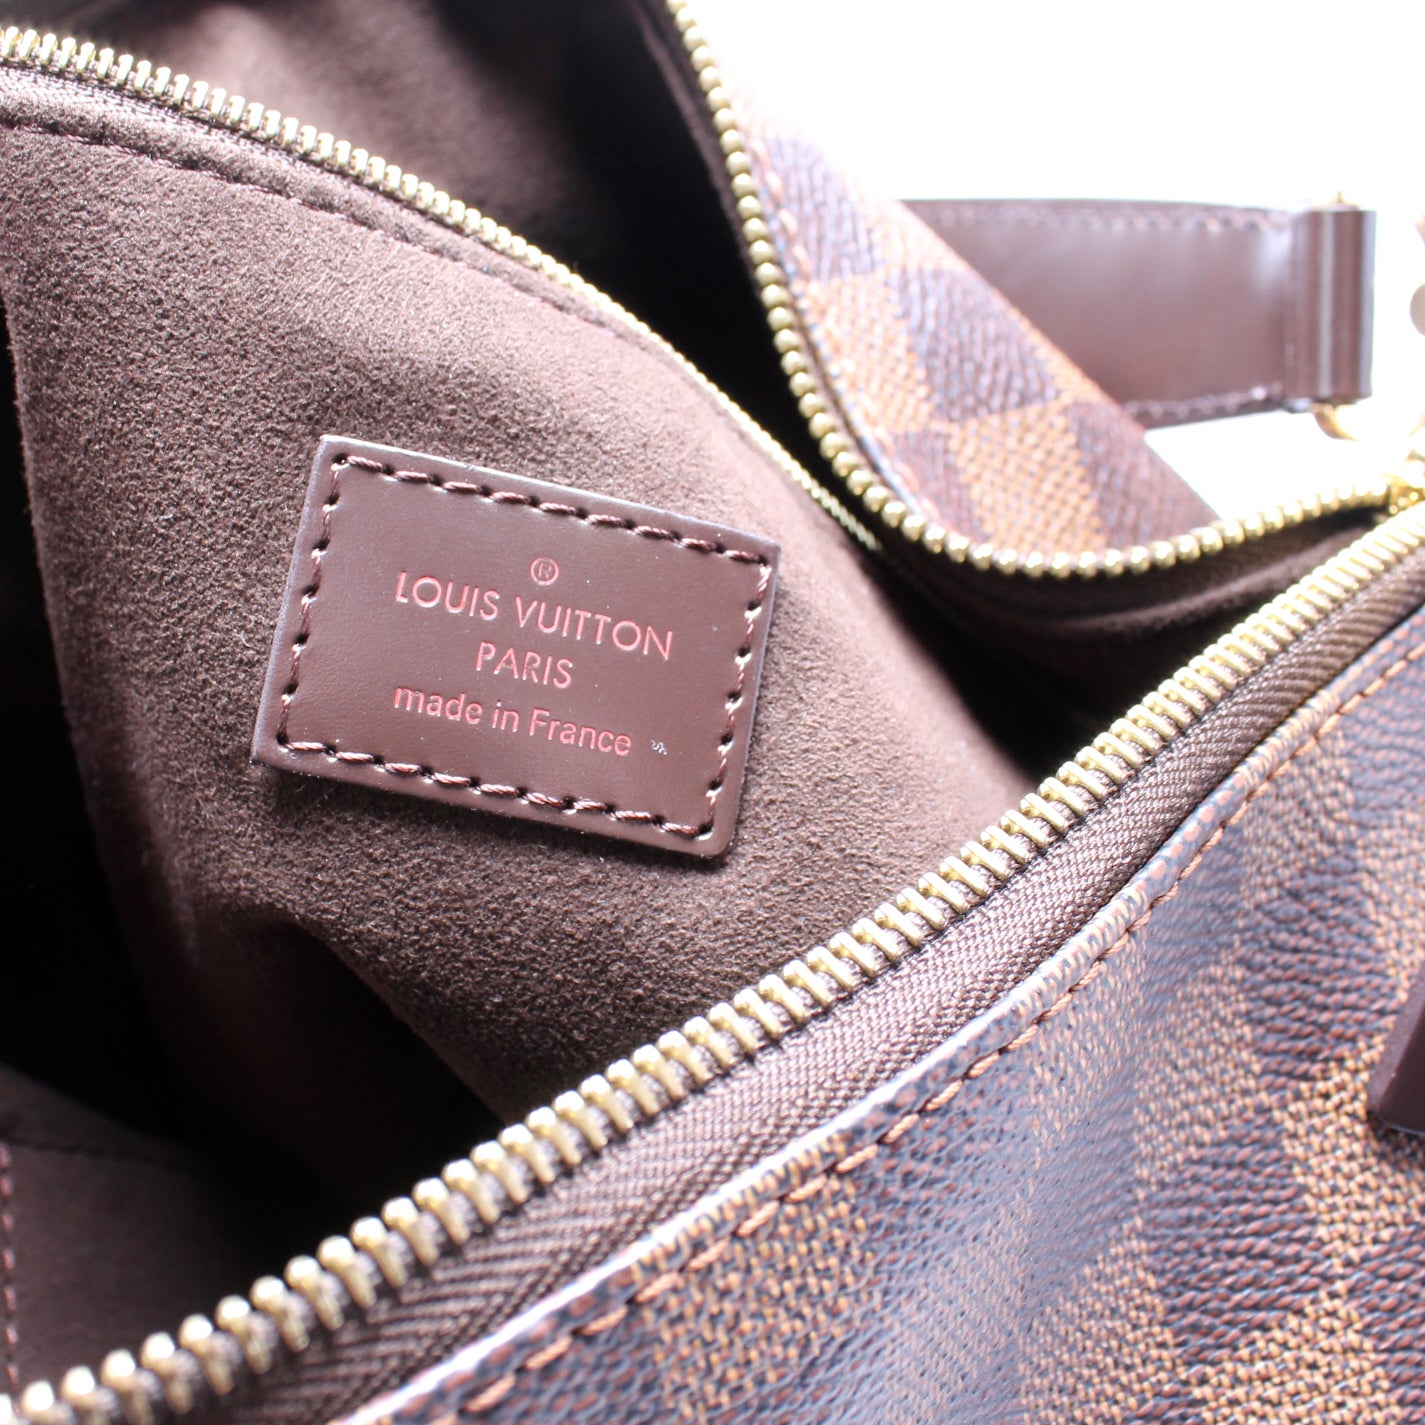 Portobello PM Damier Ebene – Keeks Designer Handbags